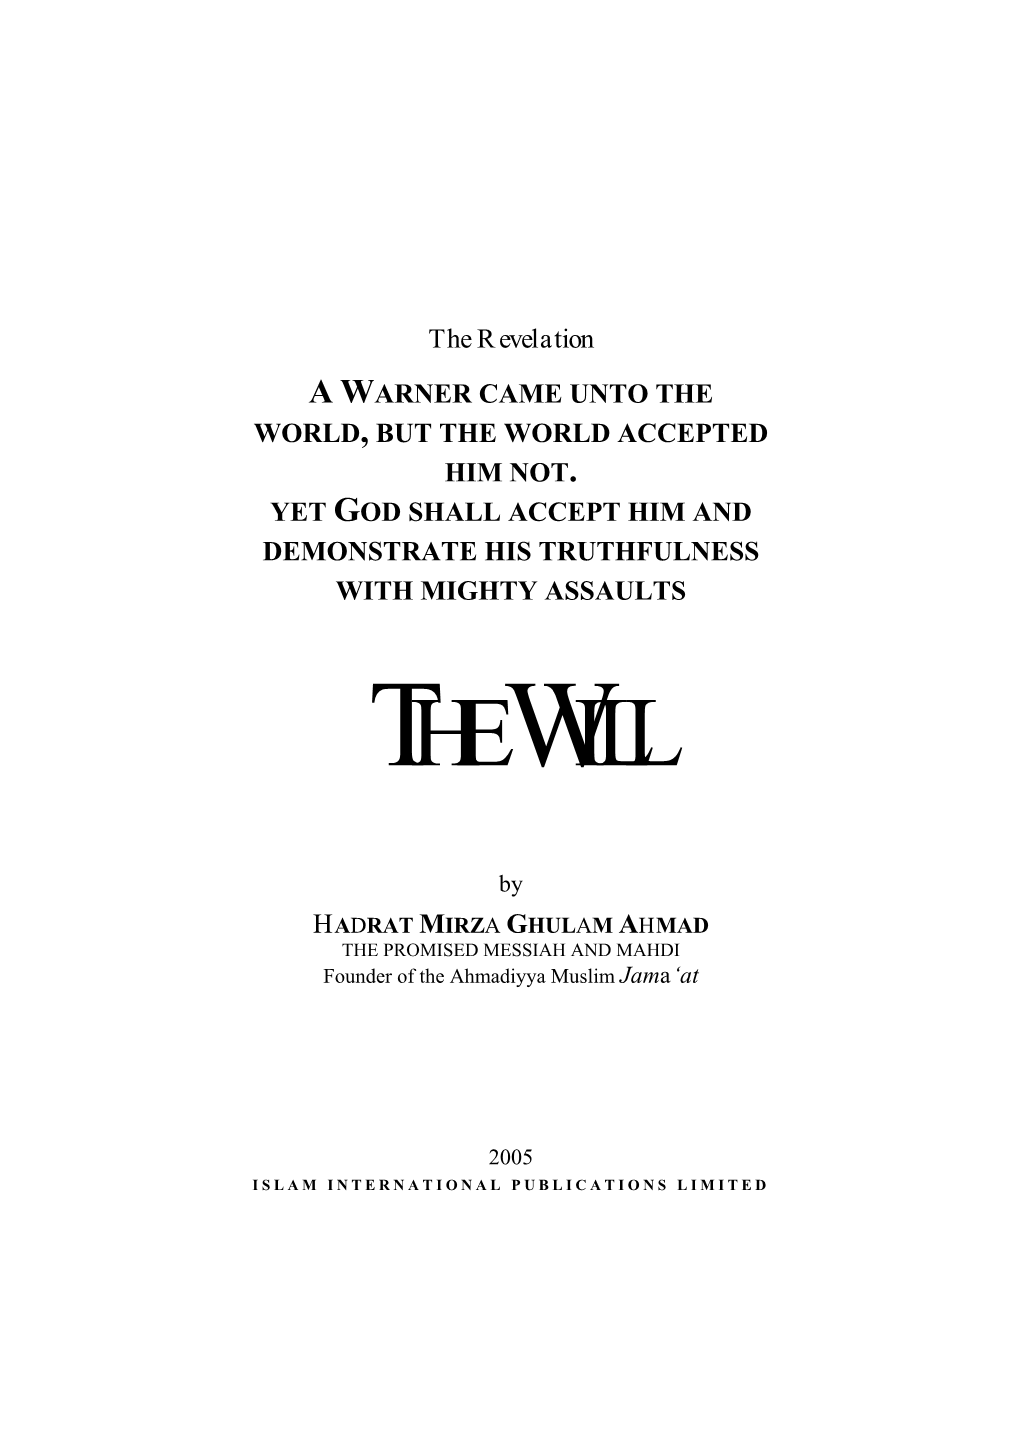 The Will (English Rendering of 'Al-Wasiyyat' [Urdu])